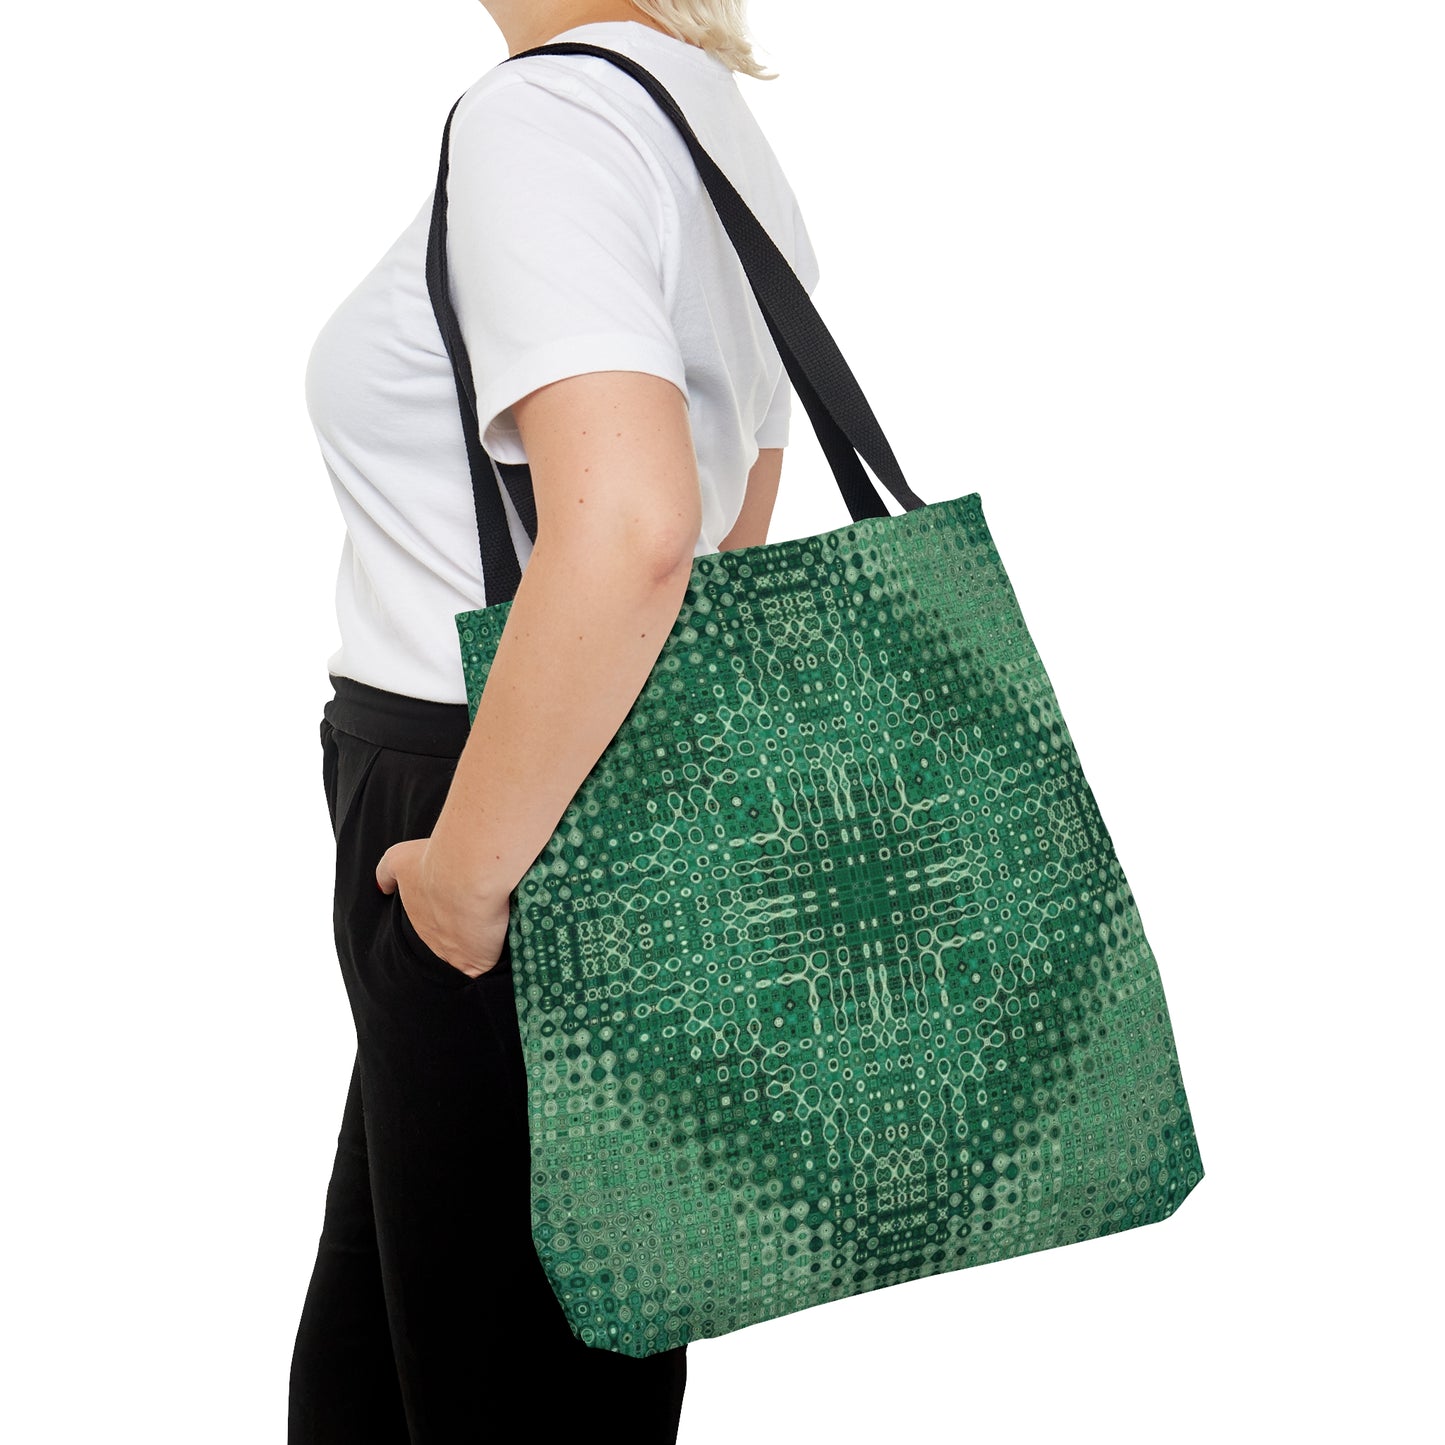 "Looped Circuits - Green" Panache Tote Bag